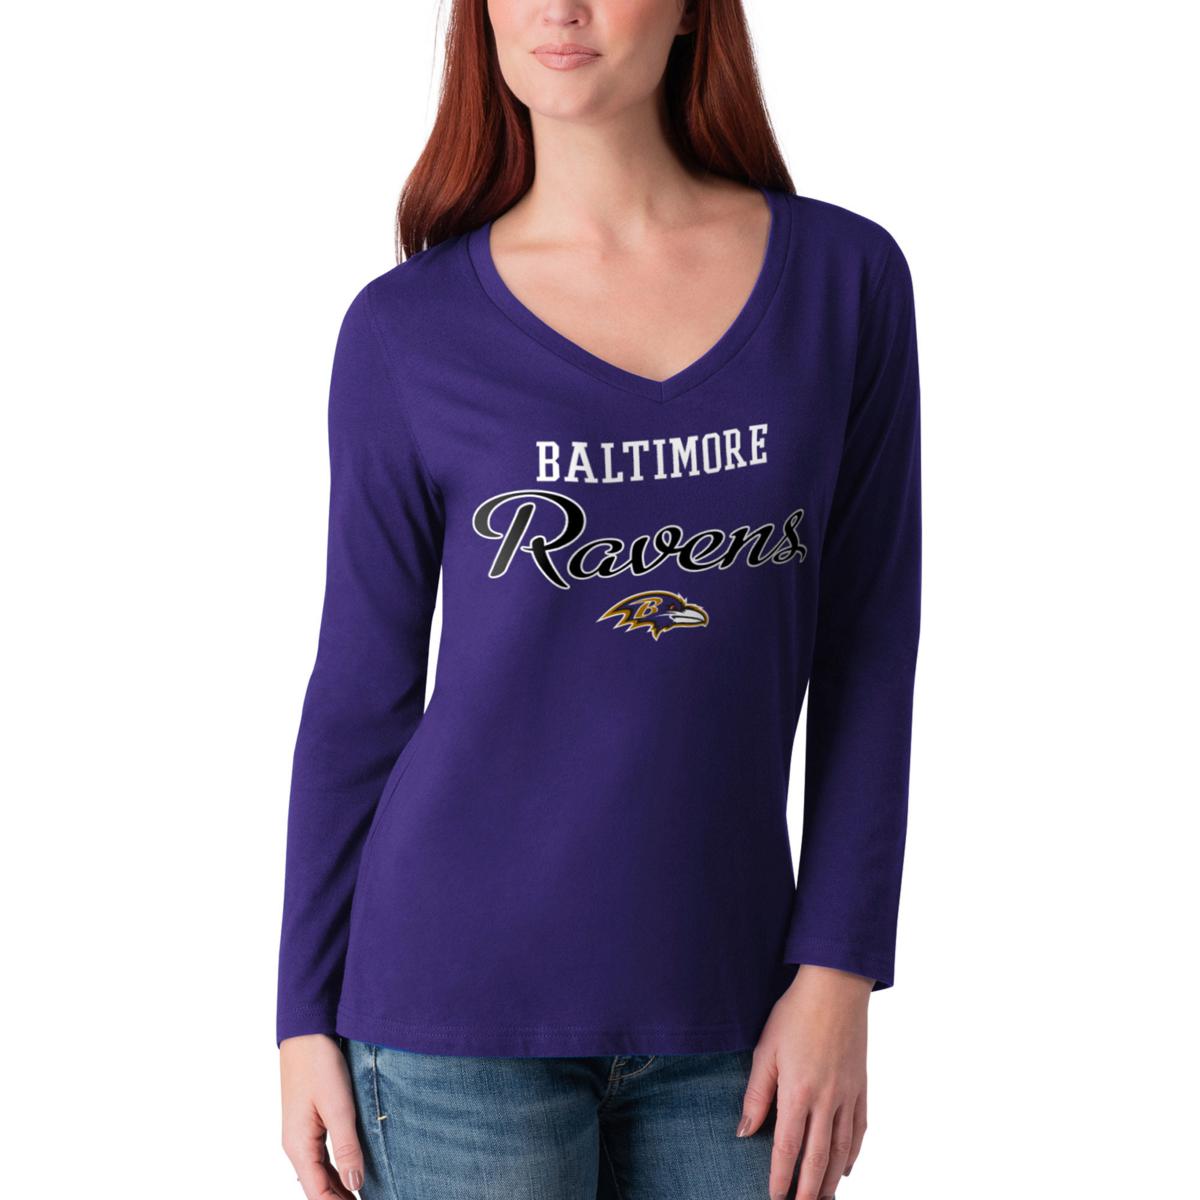 baltimore ravens women's sweatshirt